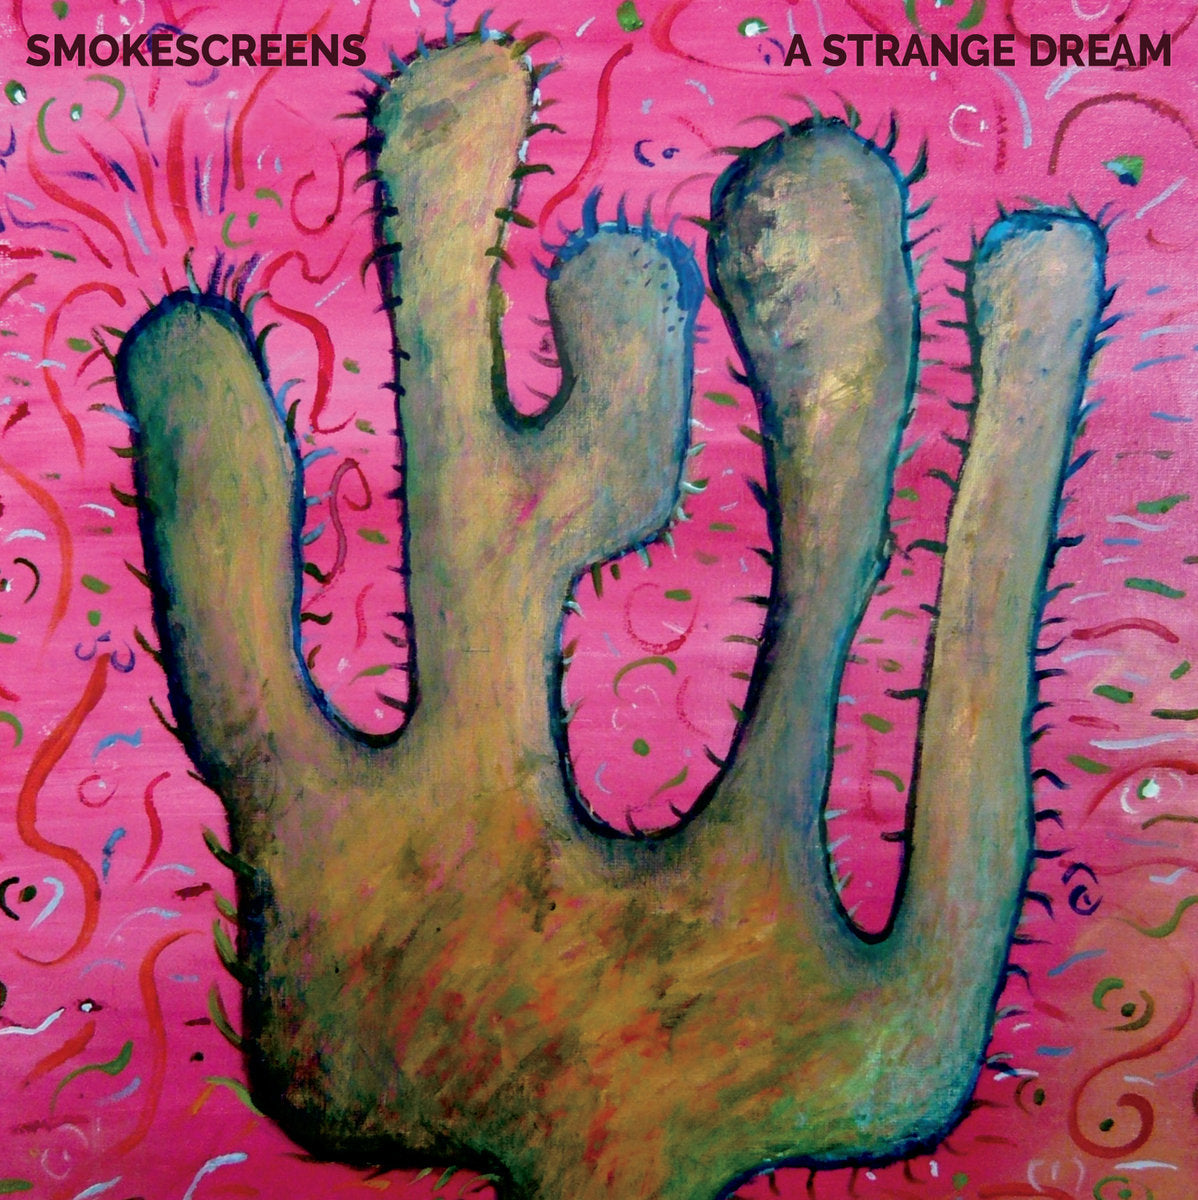 Smokescreens - A Strange Dream (Slumberland) Ltd Col LP